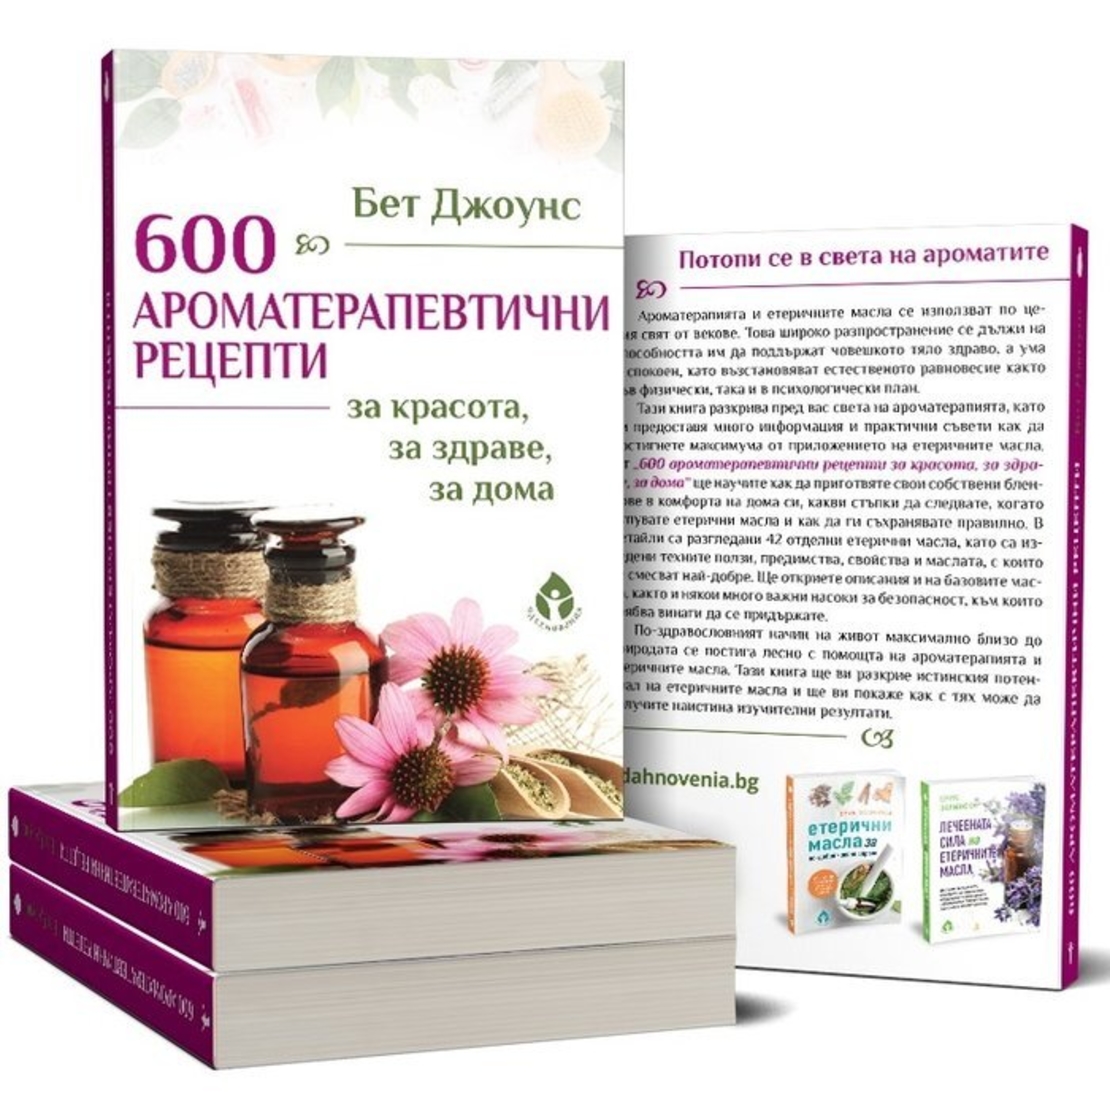 600 ароматерапевтични рецепти от Бет Джоунс